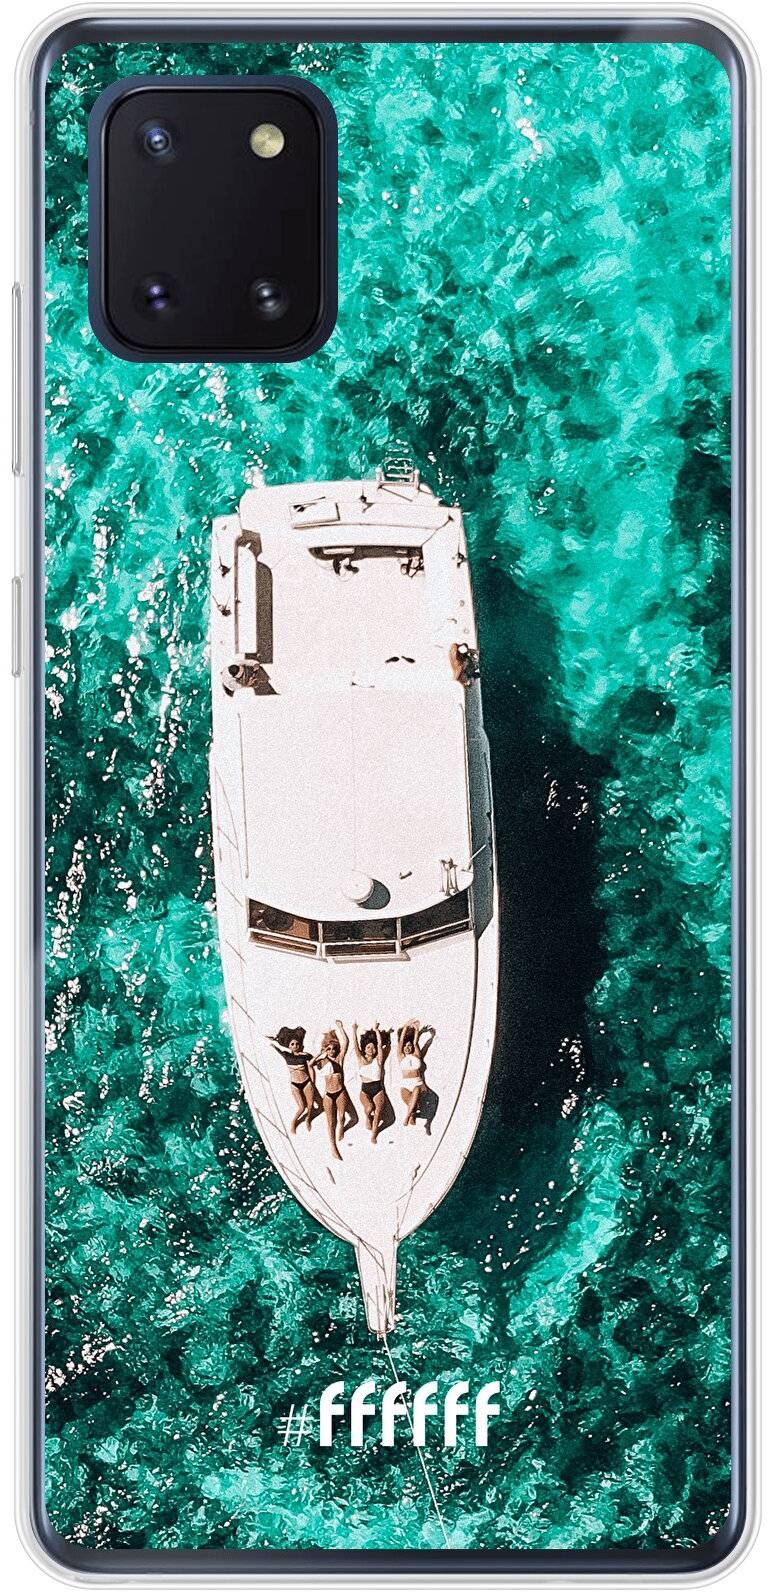 Yacht Life Galaxy Note 10 Lite